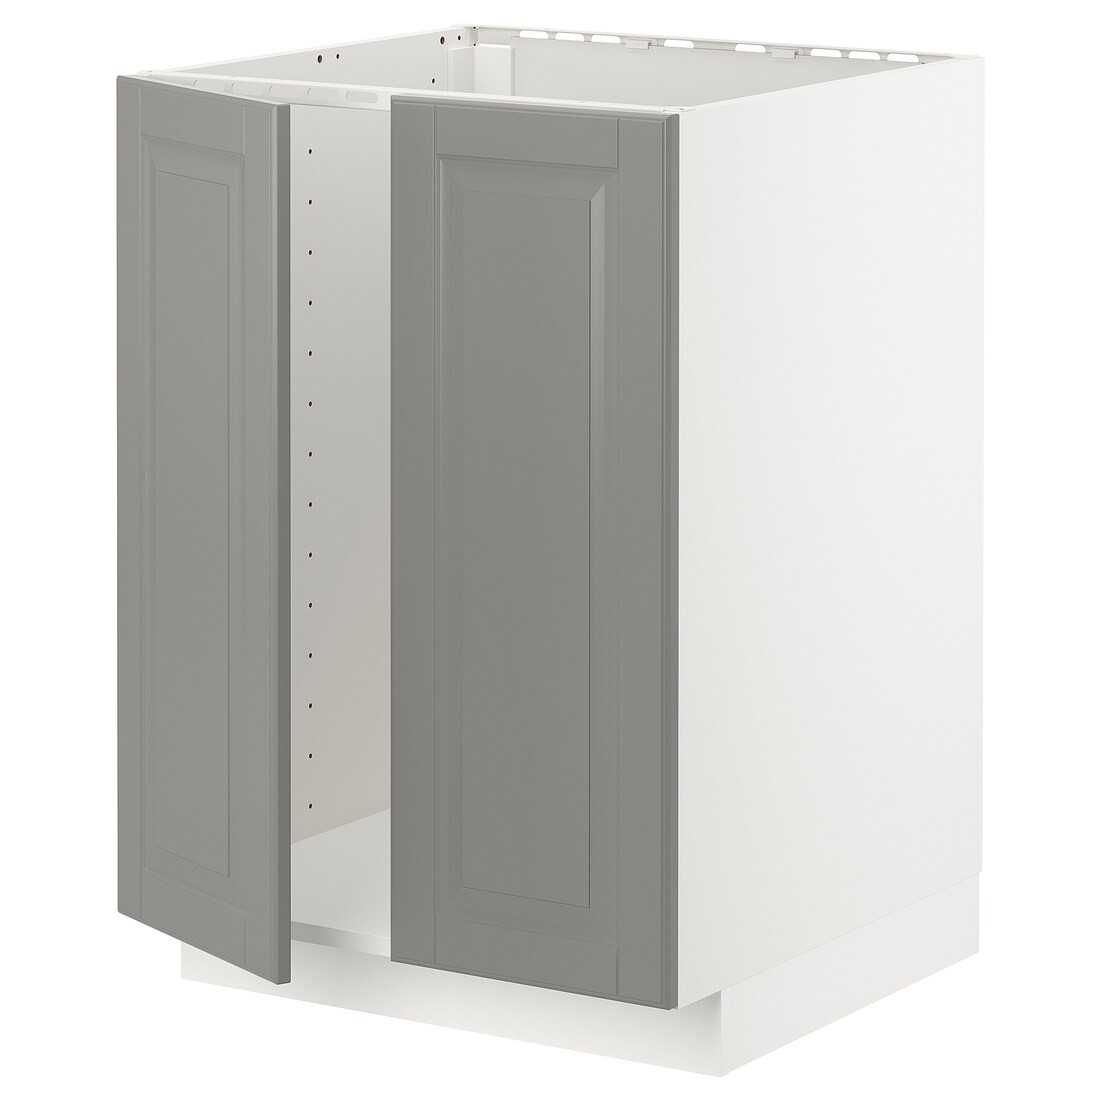 METOD МЕТОД Напольный шкаф для мойки, белый / Bodbyn серый, 60x60 см